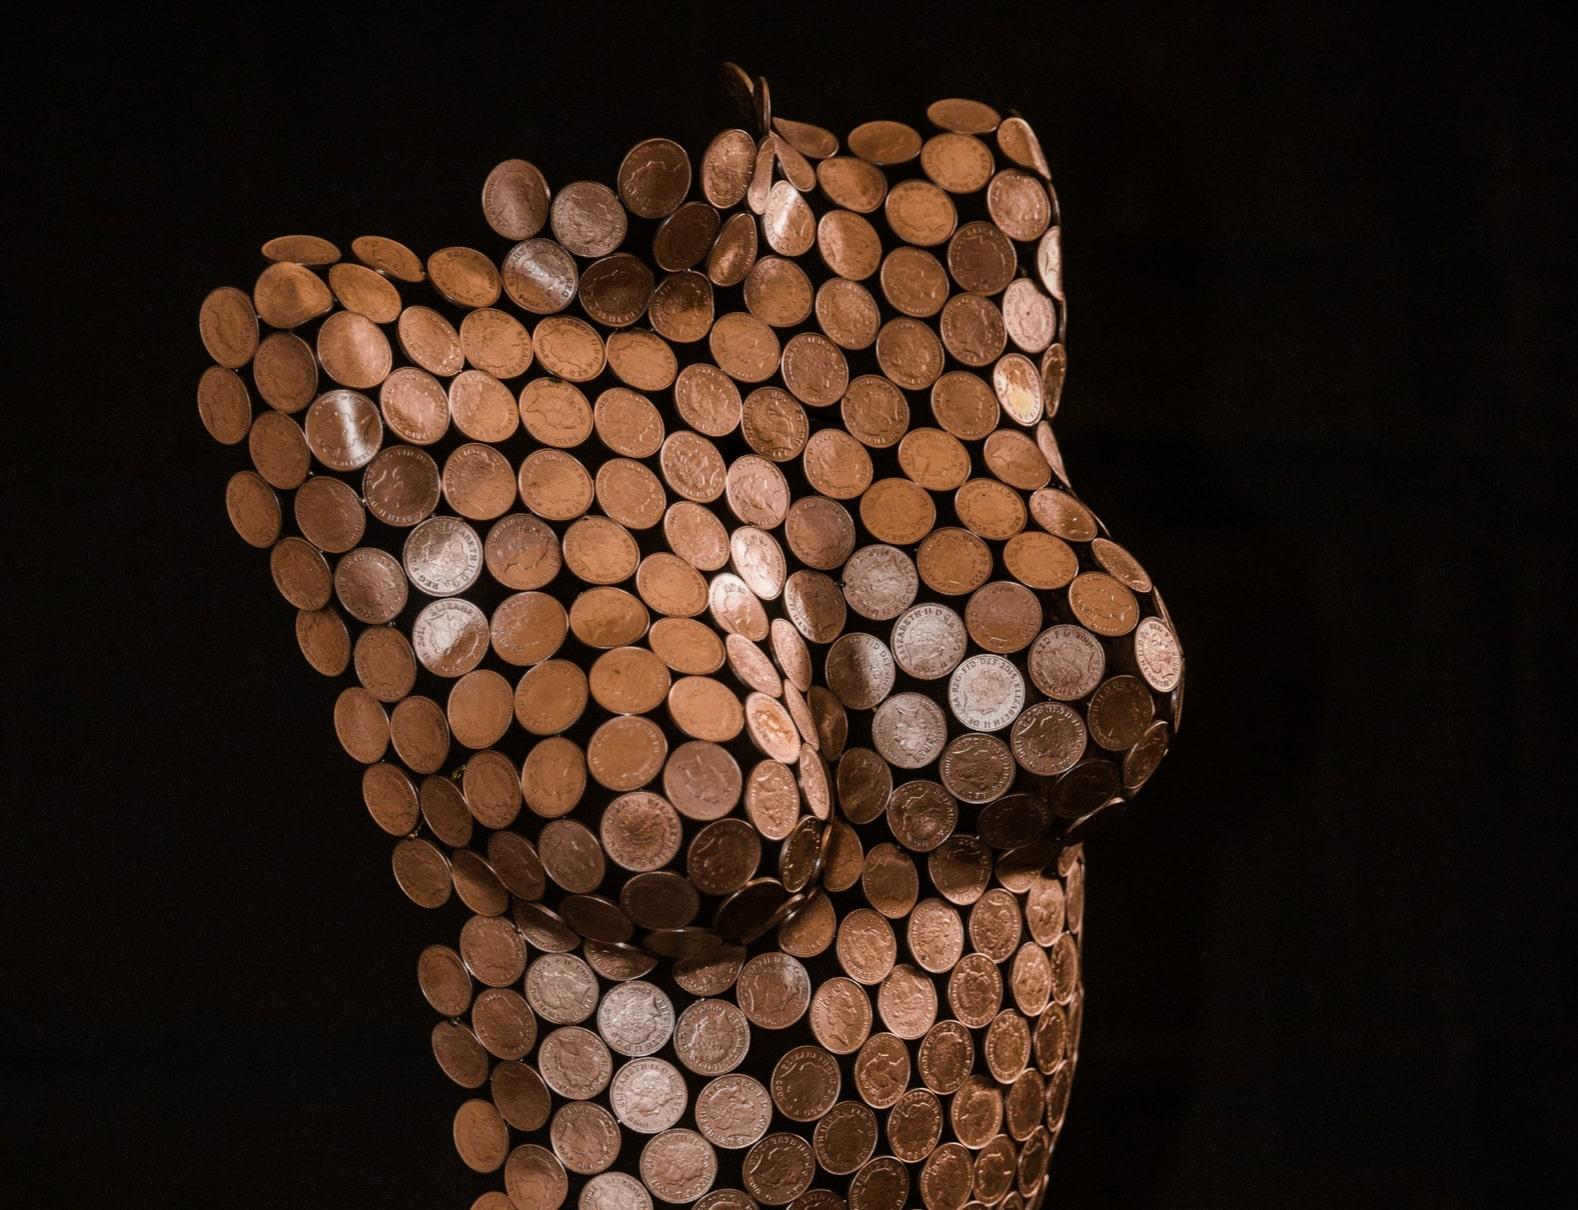 Torso 2p (Front) - original metallic female form sculpture - contemporary art  - Contemporary Sculpture by Shaun Gagg